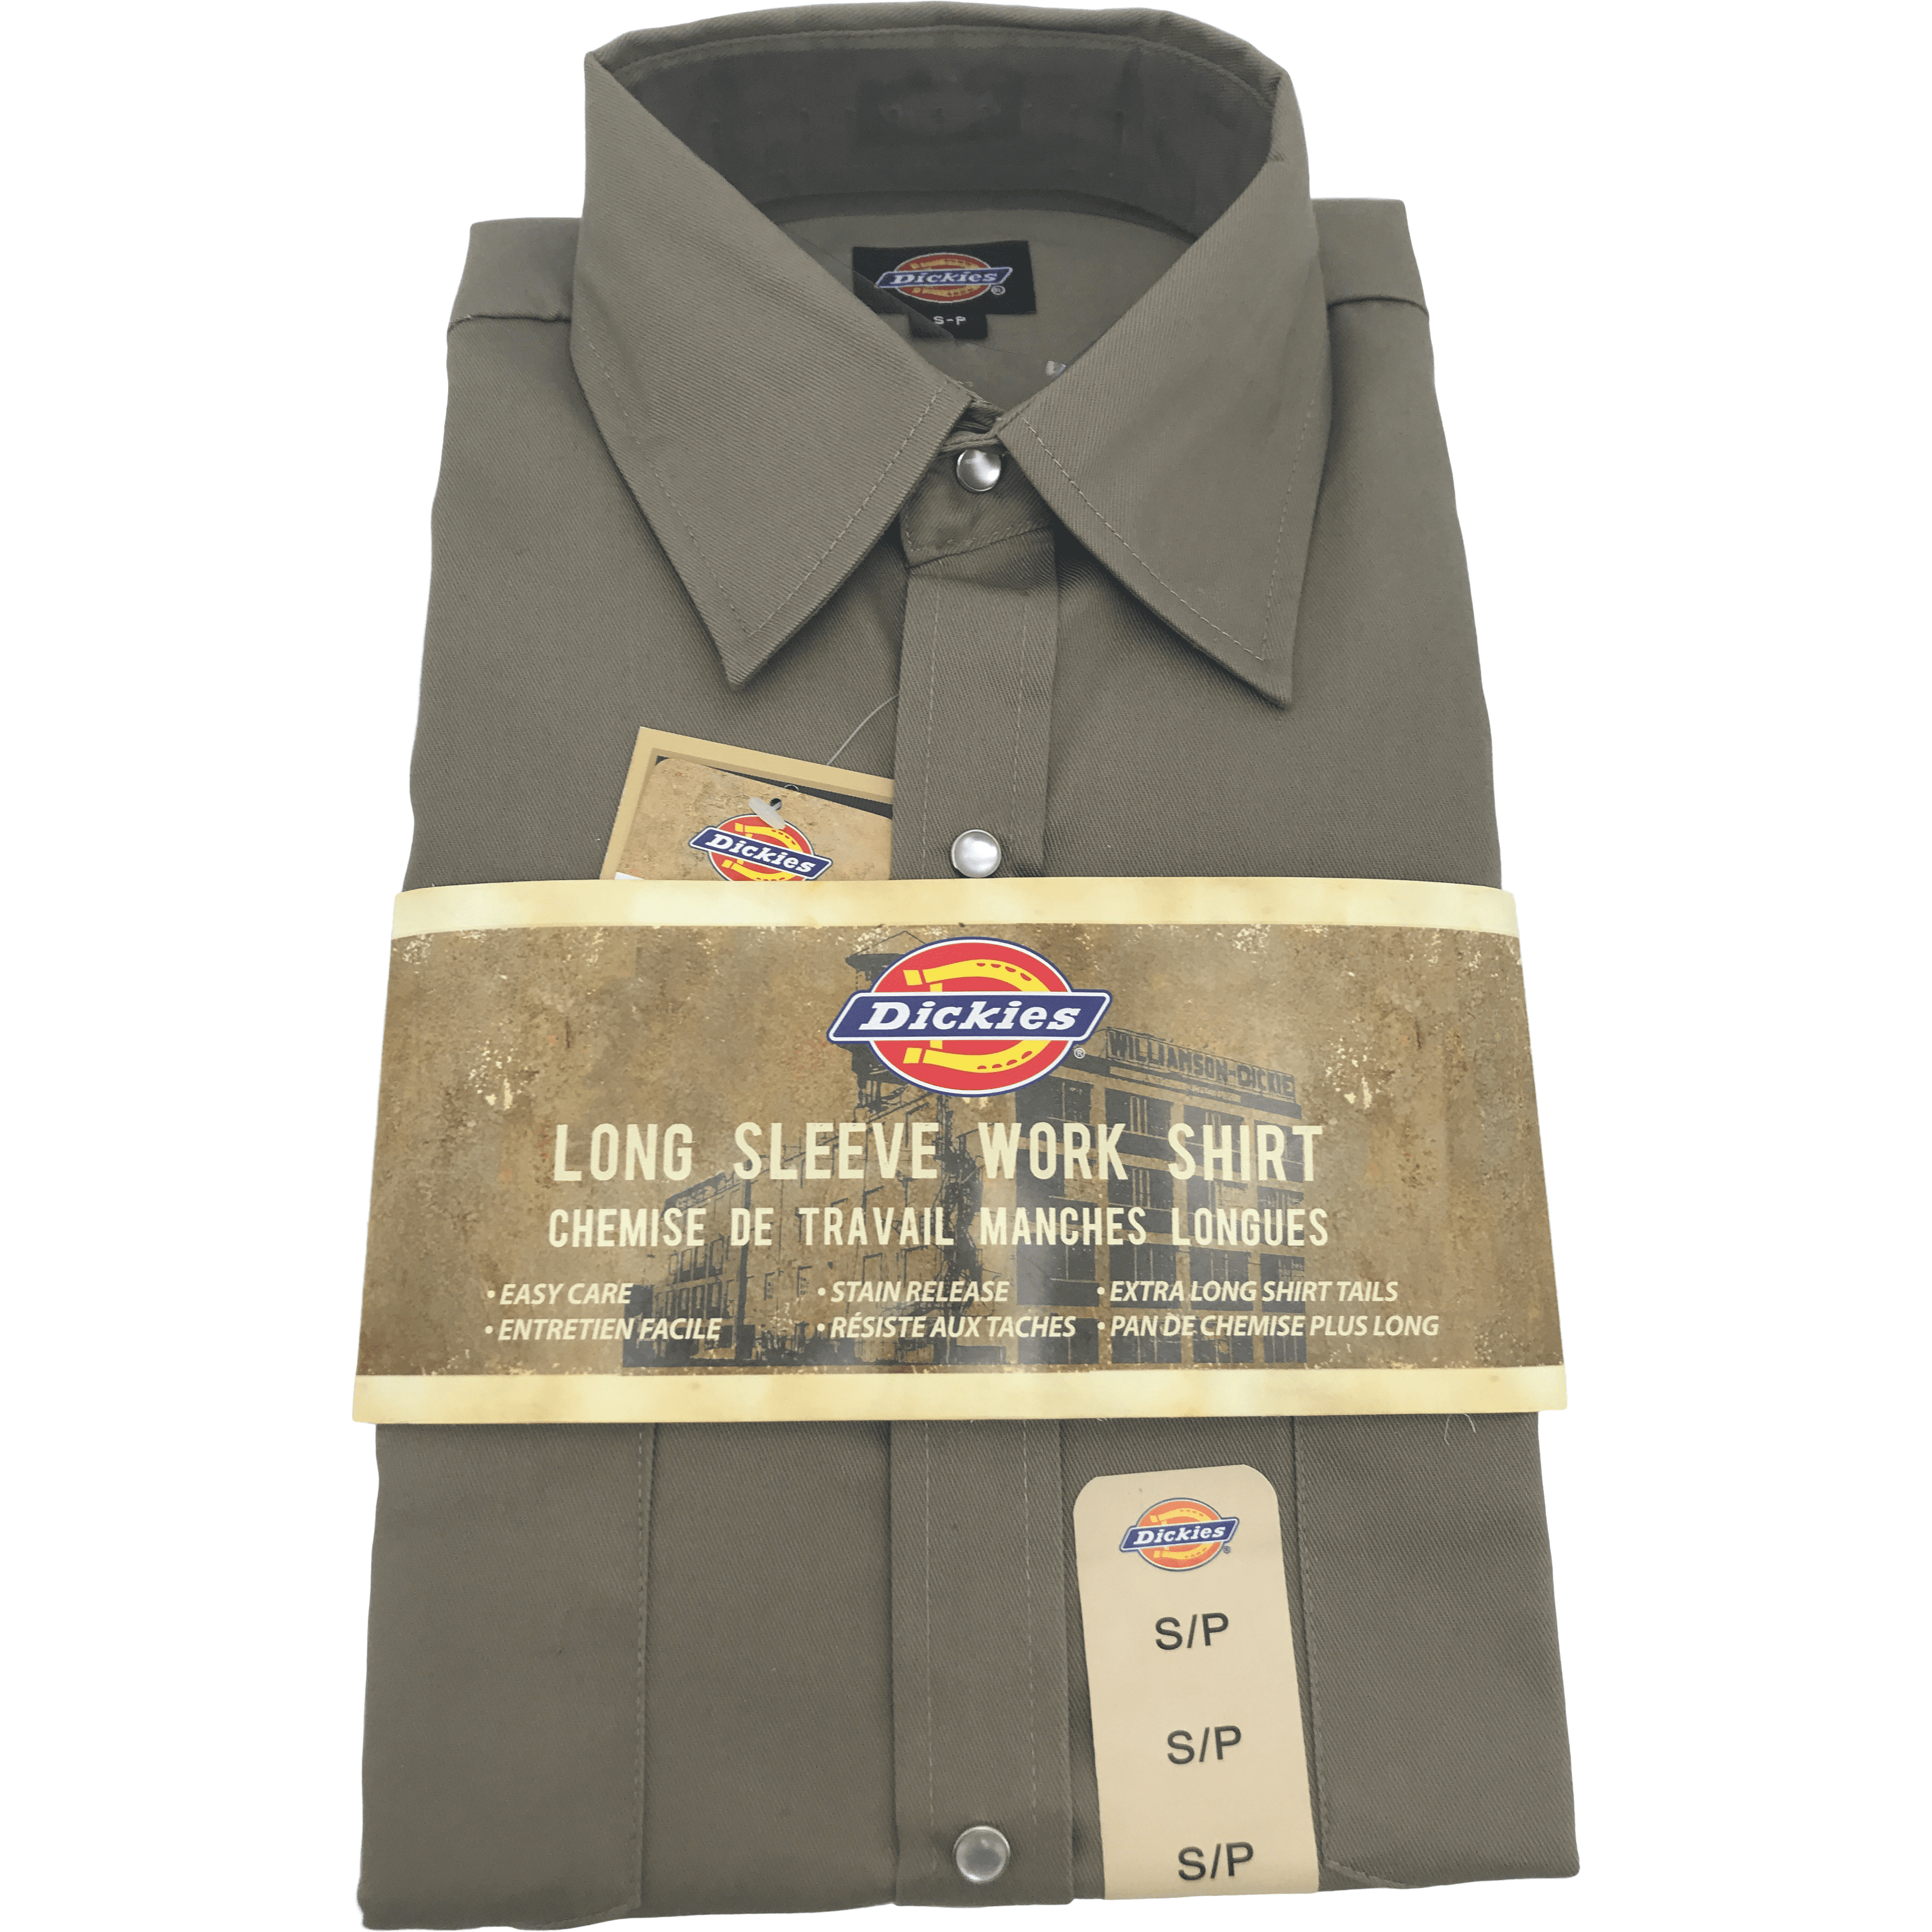 Dickies Long Sleeve Work Shirt / Easy Clean / Extra Long Shirt Tails / Khaki